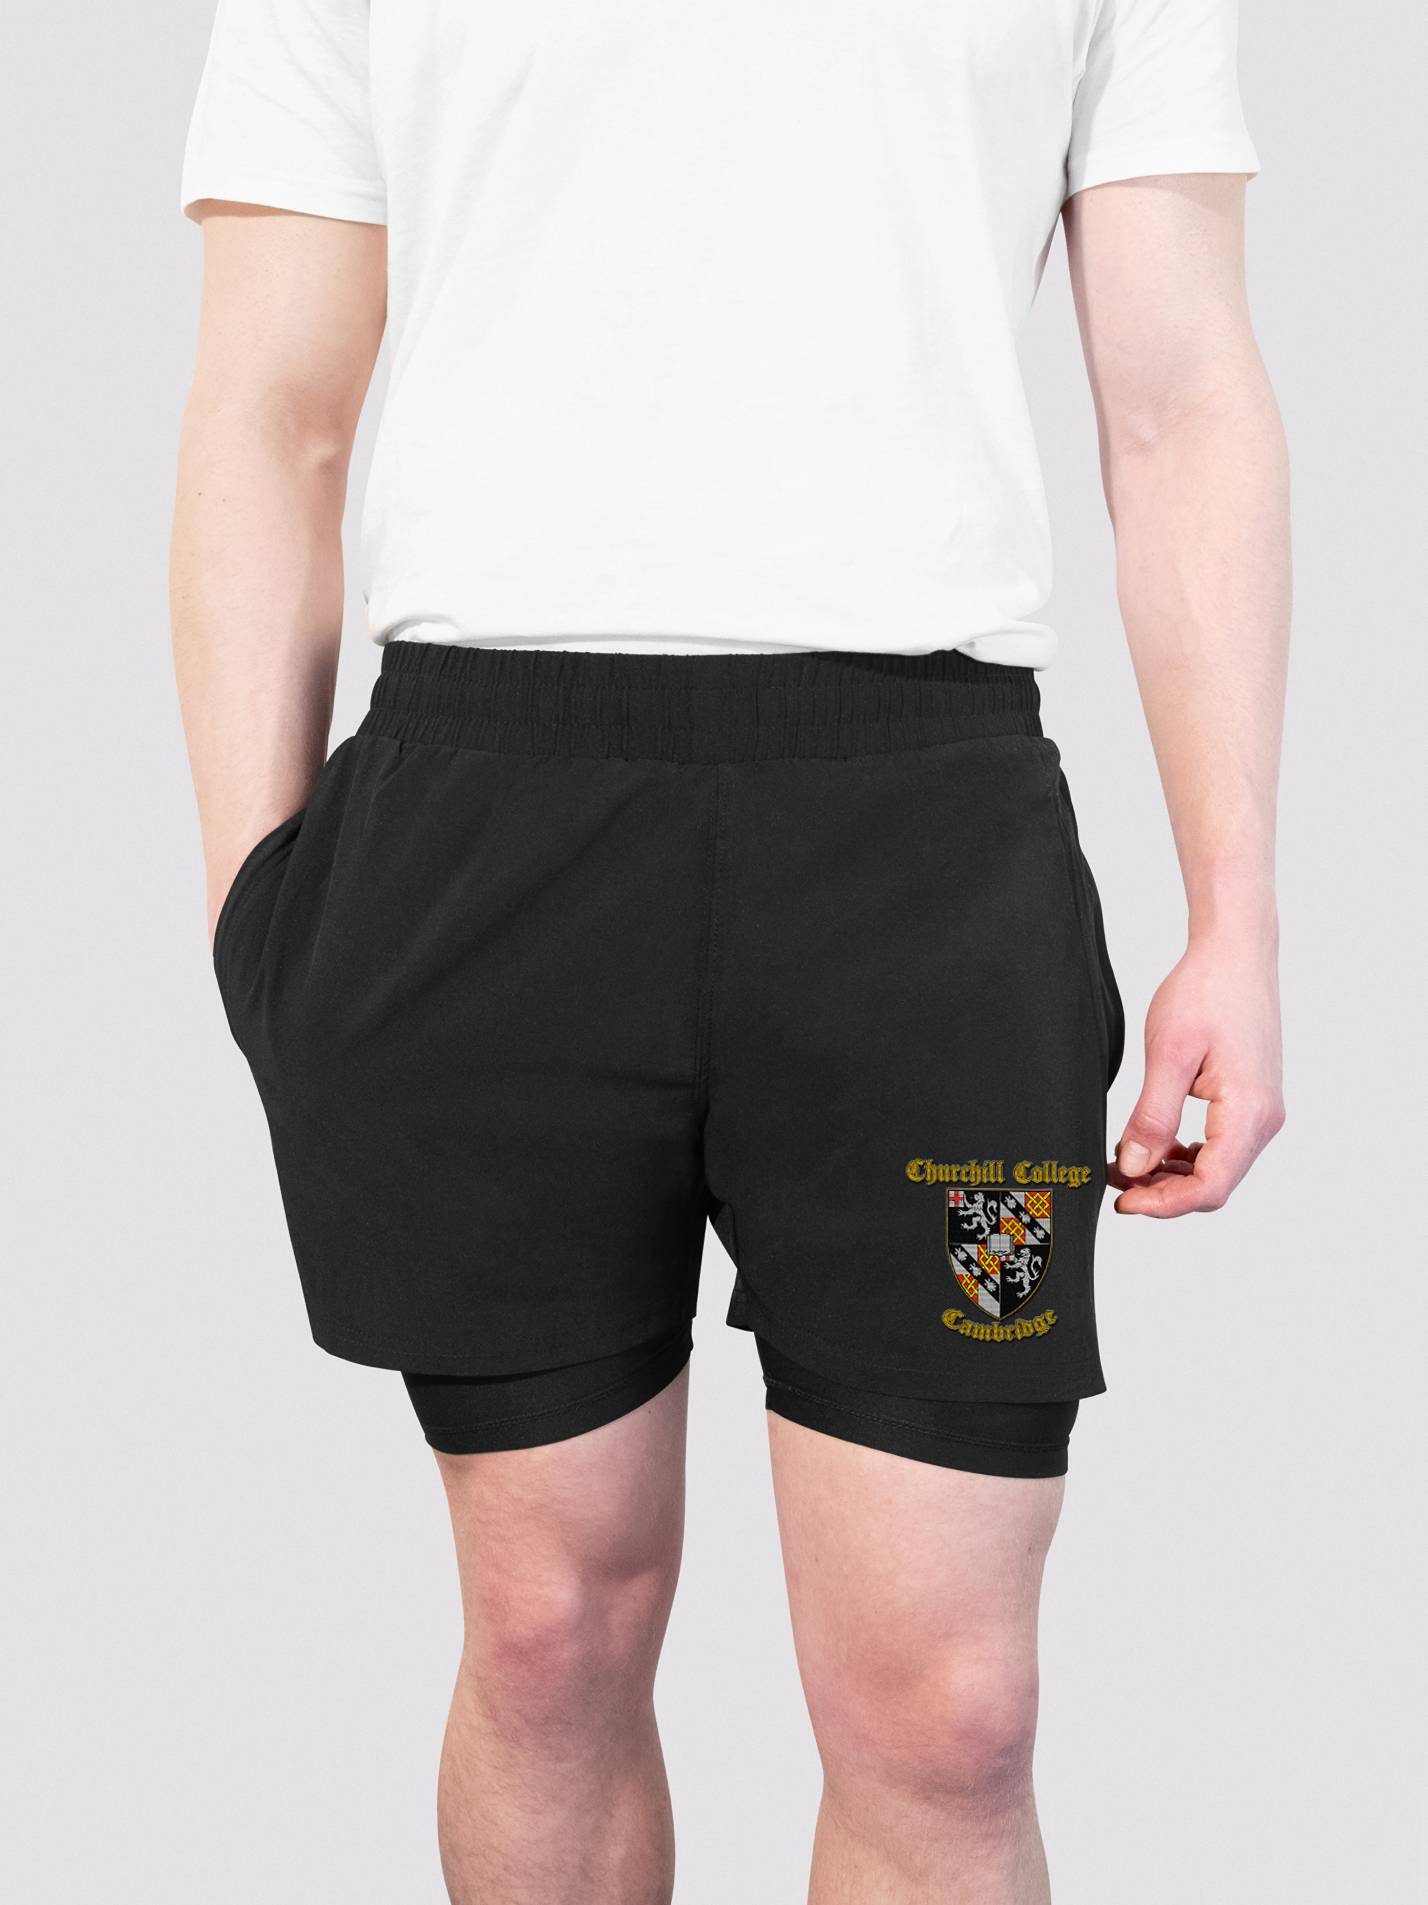 Churchill College Cambridge MCR Dual Layer Sports Shorts